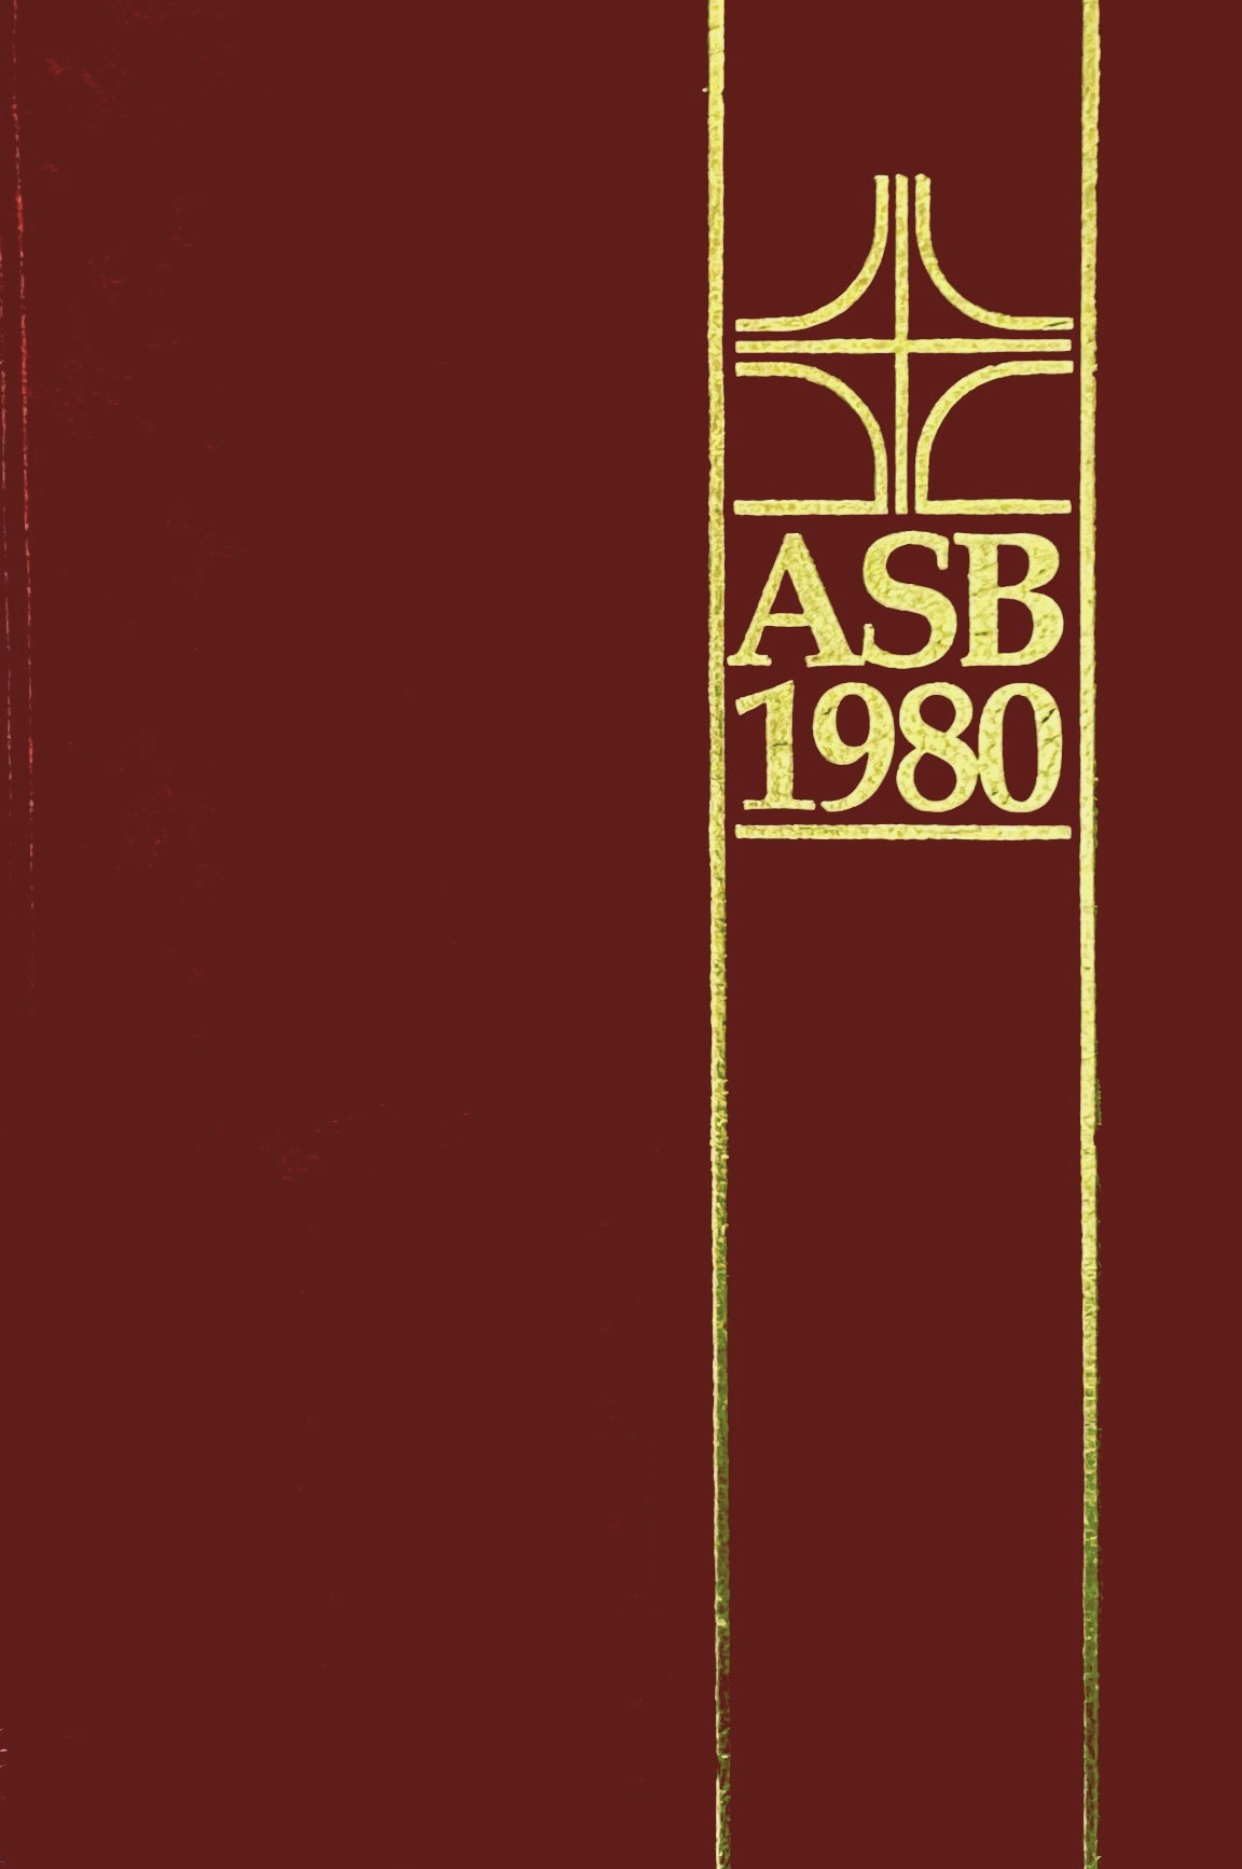 Cover of The Alternative Service Book 1980